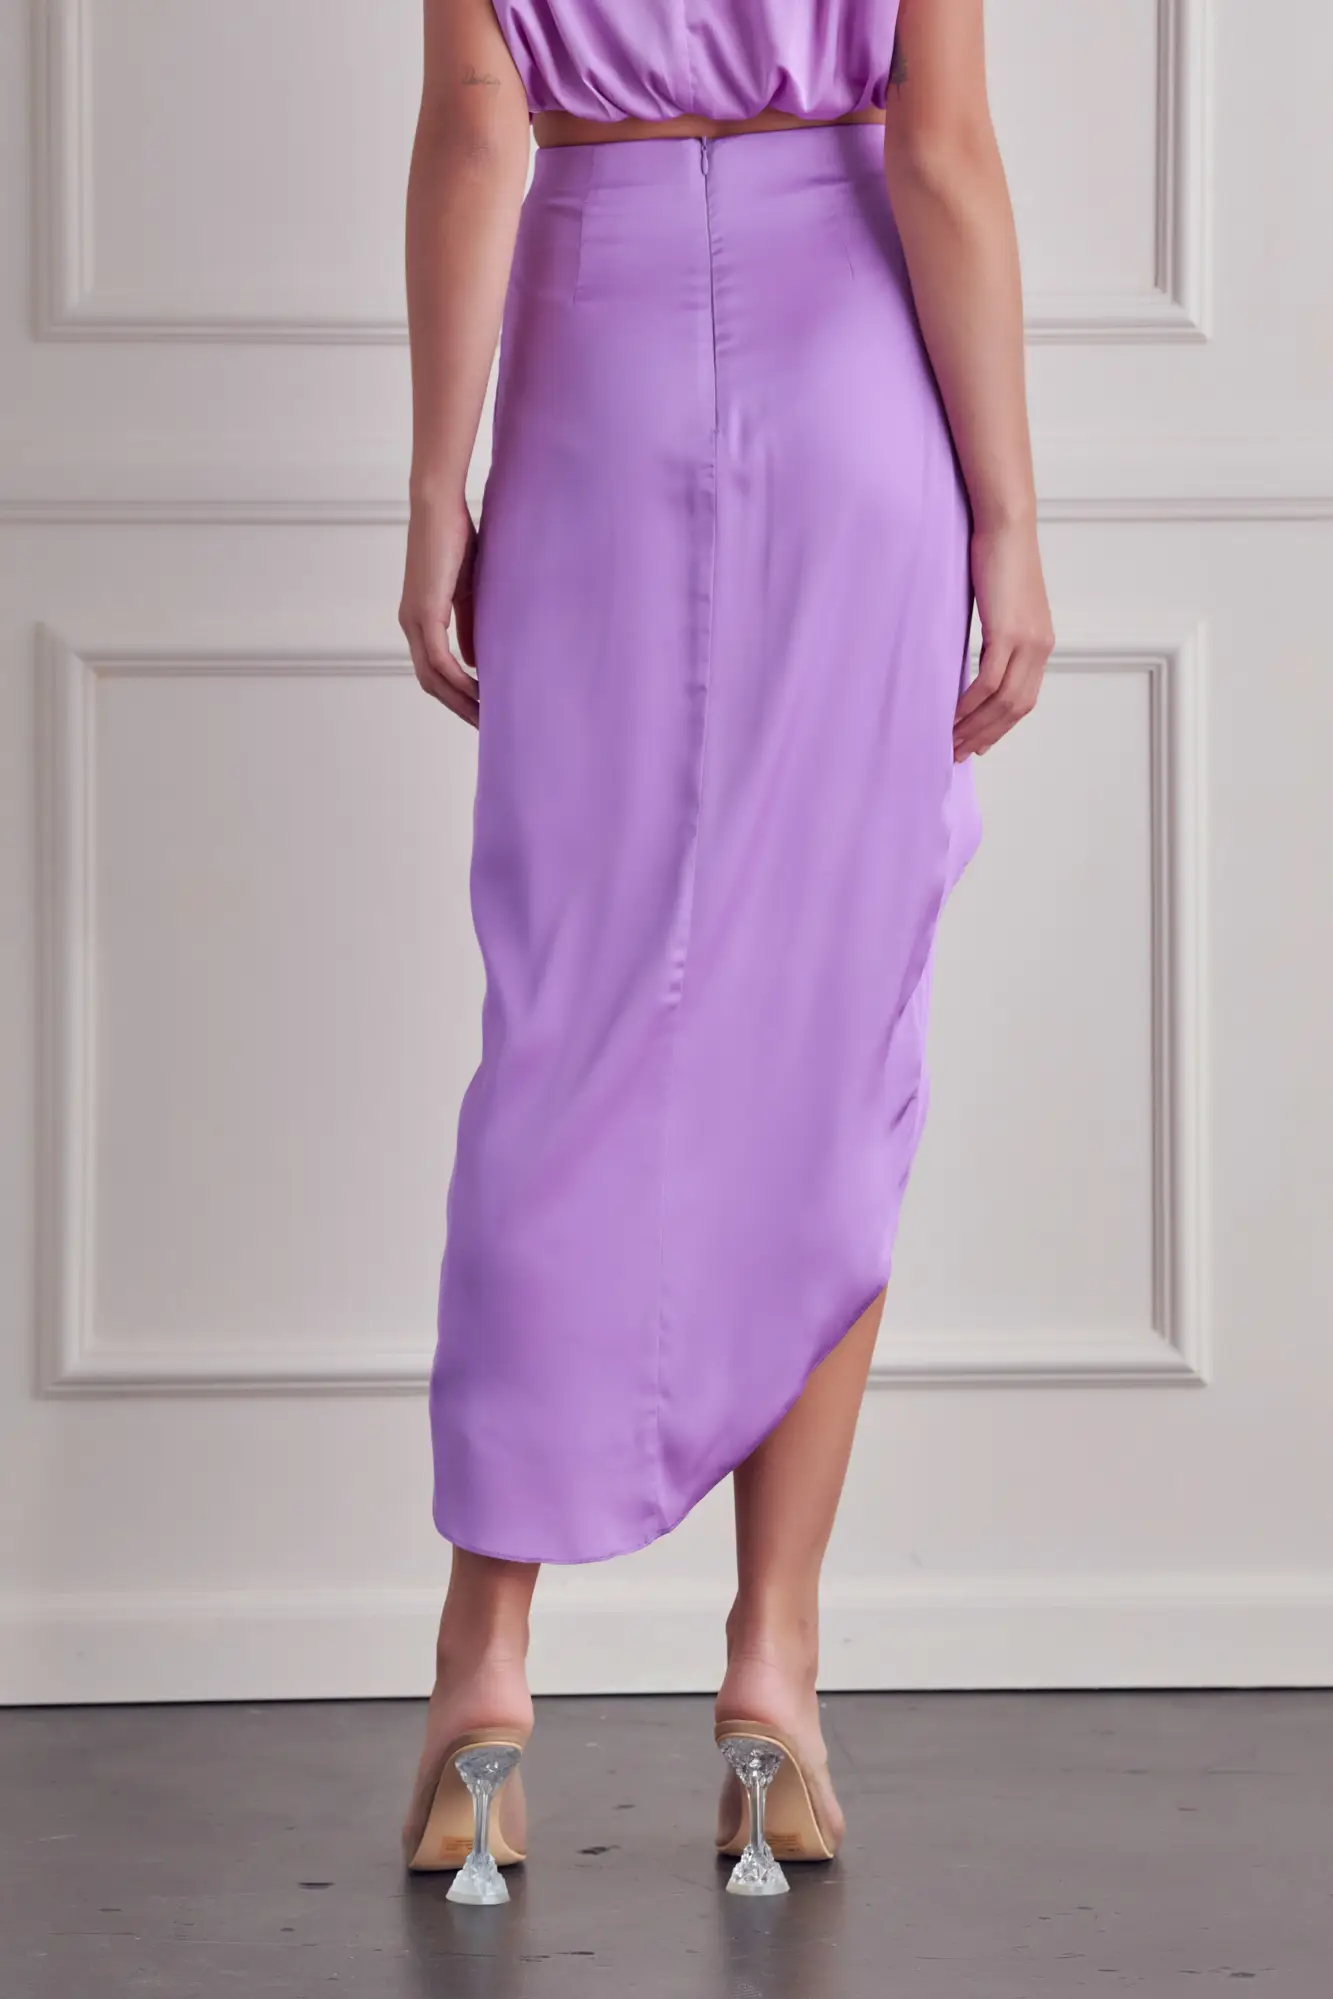 Simply Irresistible Lavender Midi Skirt